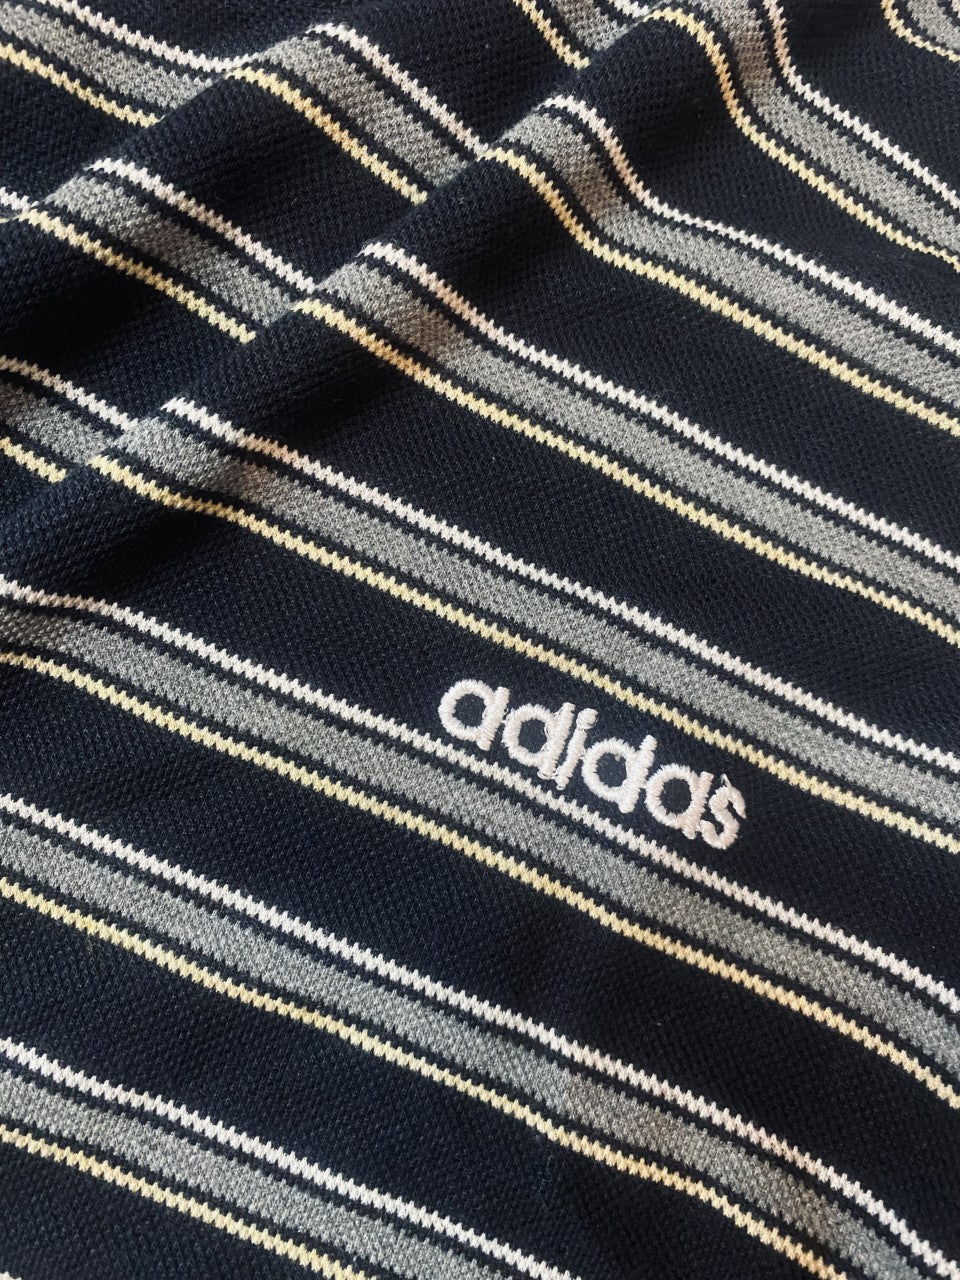 Adidas Striped Tee